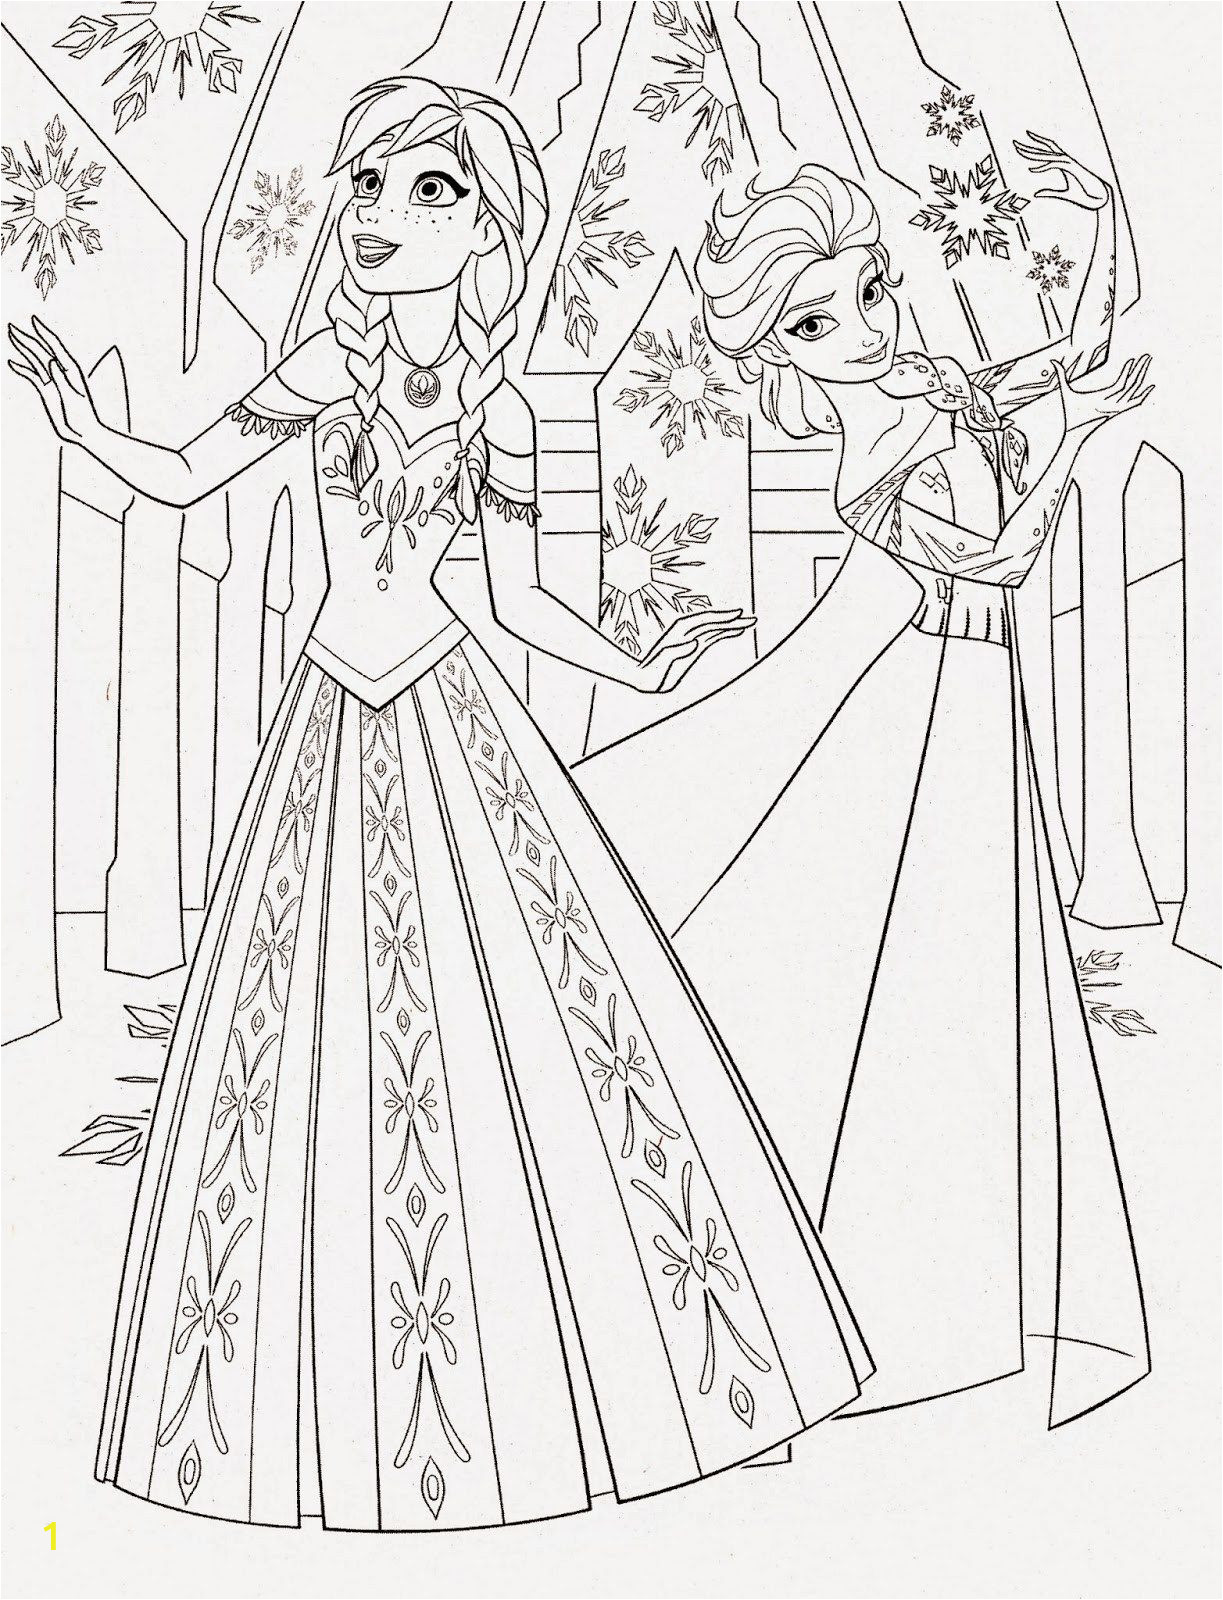 Disney Princess Coloring Pages Frozen Elsa and Anna Disney Princess Frozen Elsa and Anna Coloring Pages